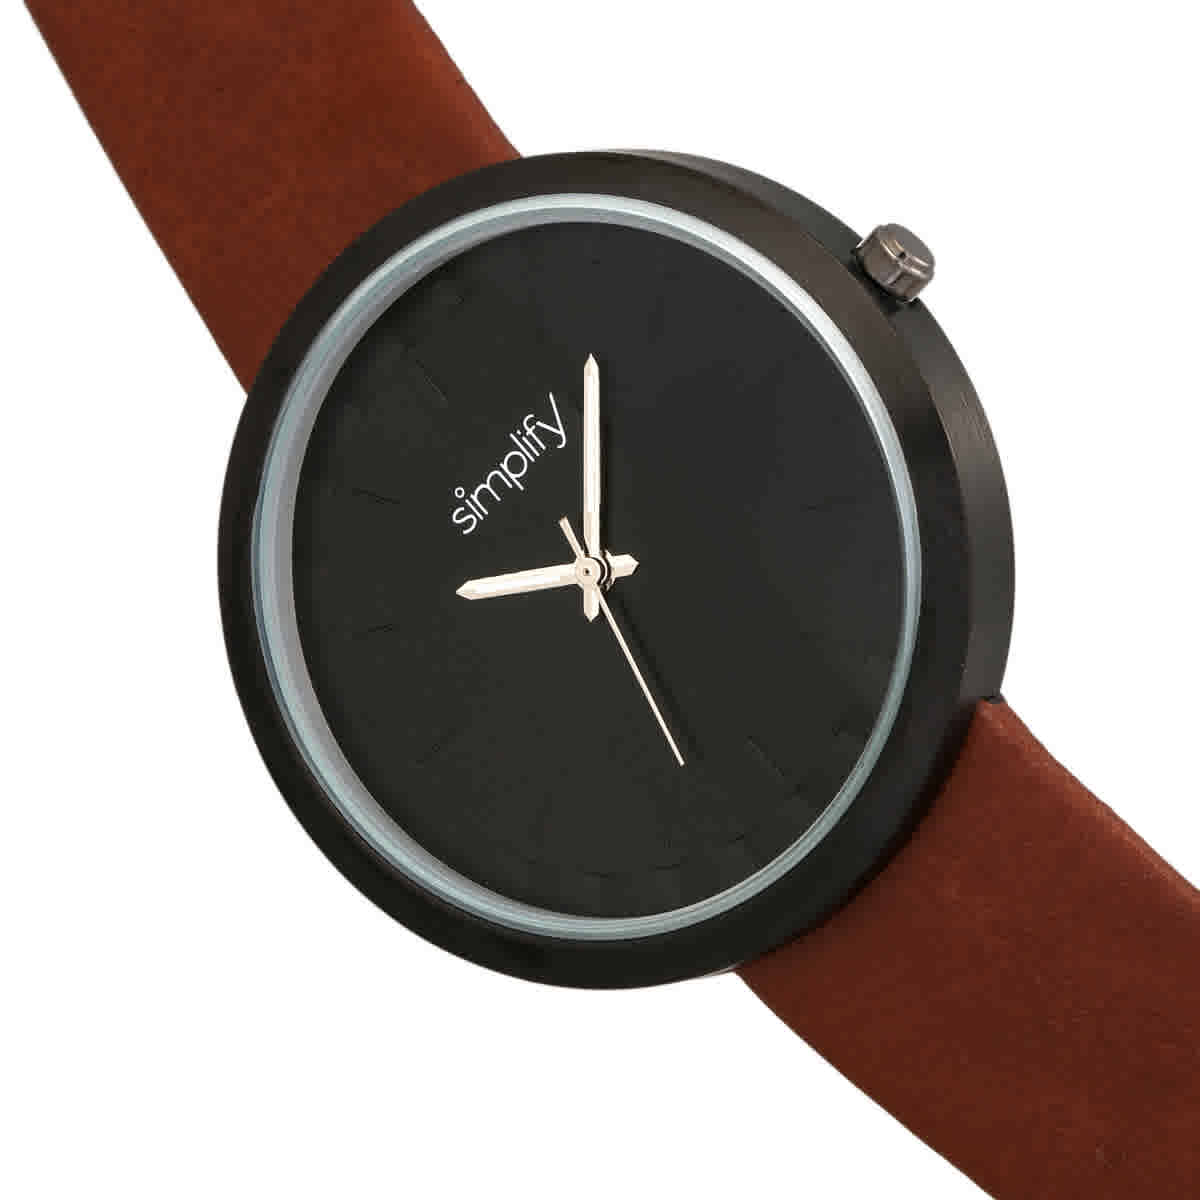 Shop Simplify The 6000 Black Dial Light Brown Leatherette Watch Sim6005 In Black / Brown